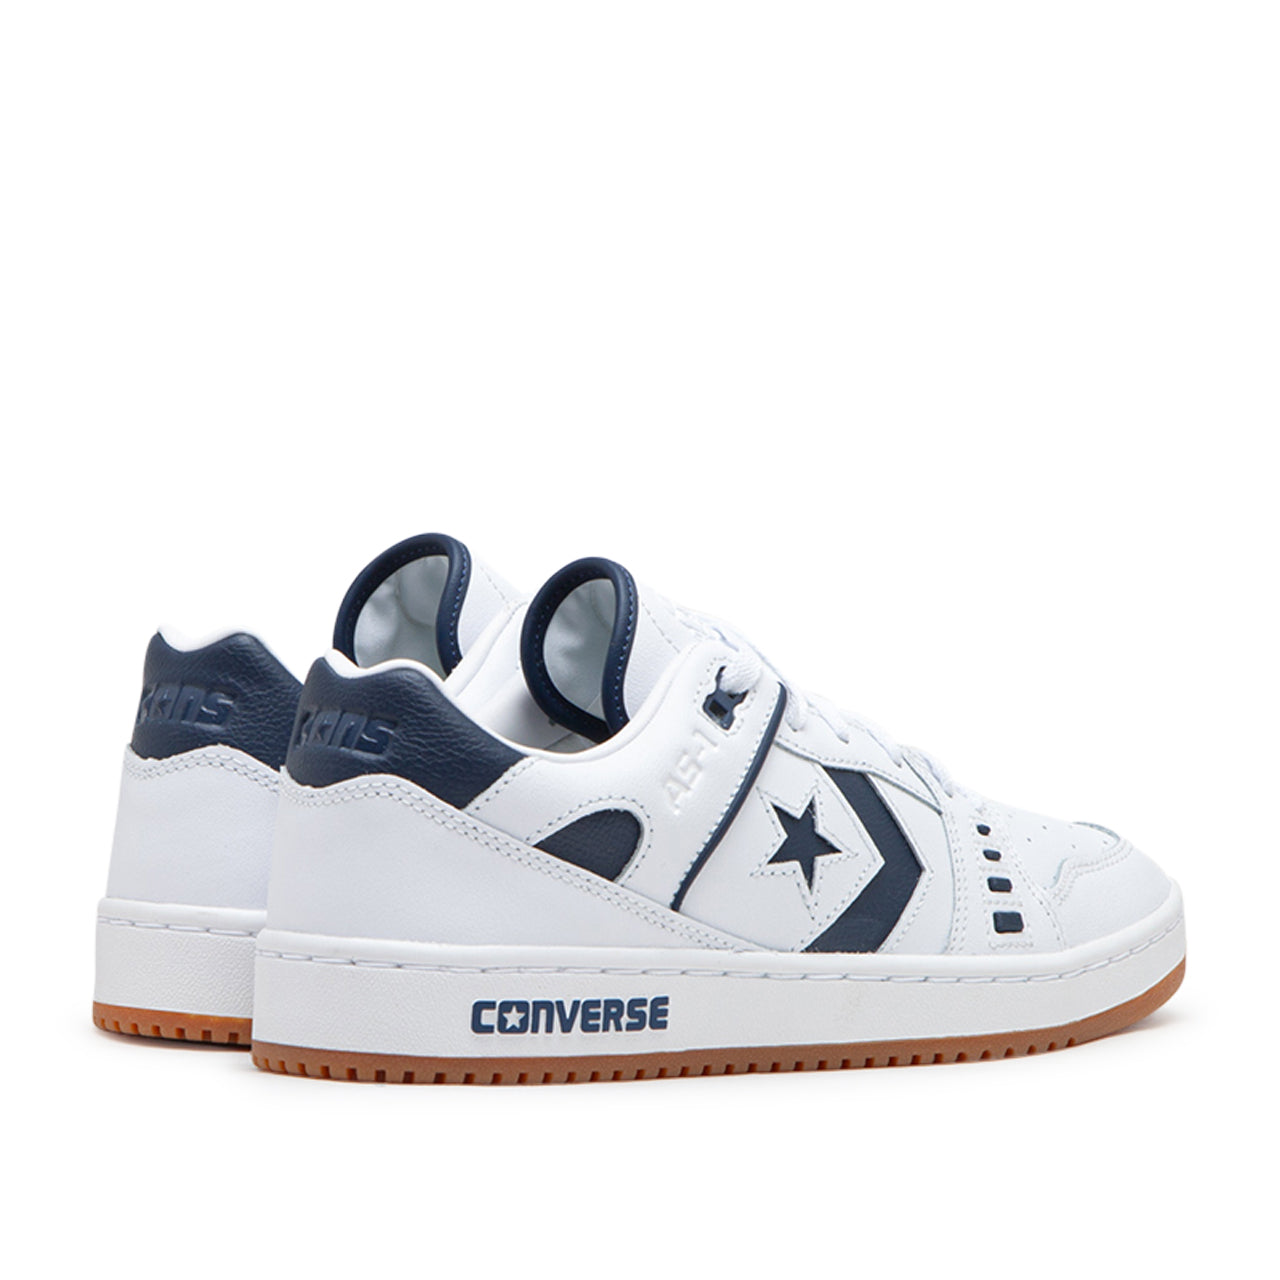 Converse Cons AS-1 Pro Skate (Weiß / Navy)  - Cheap Cerbe Jordan Outlet